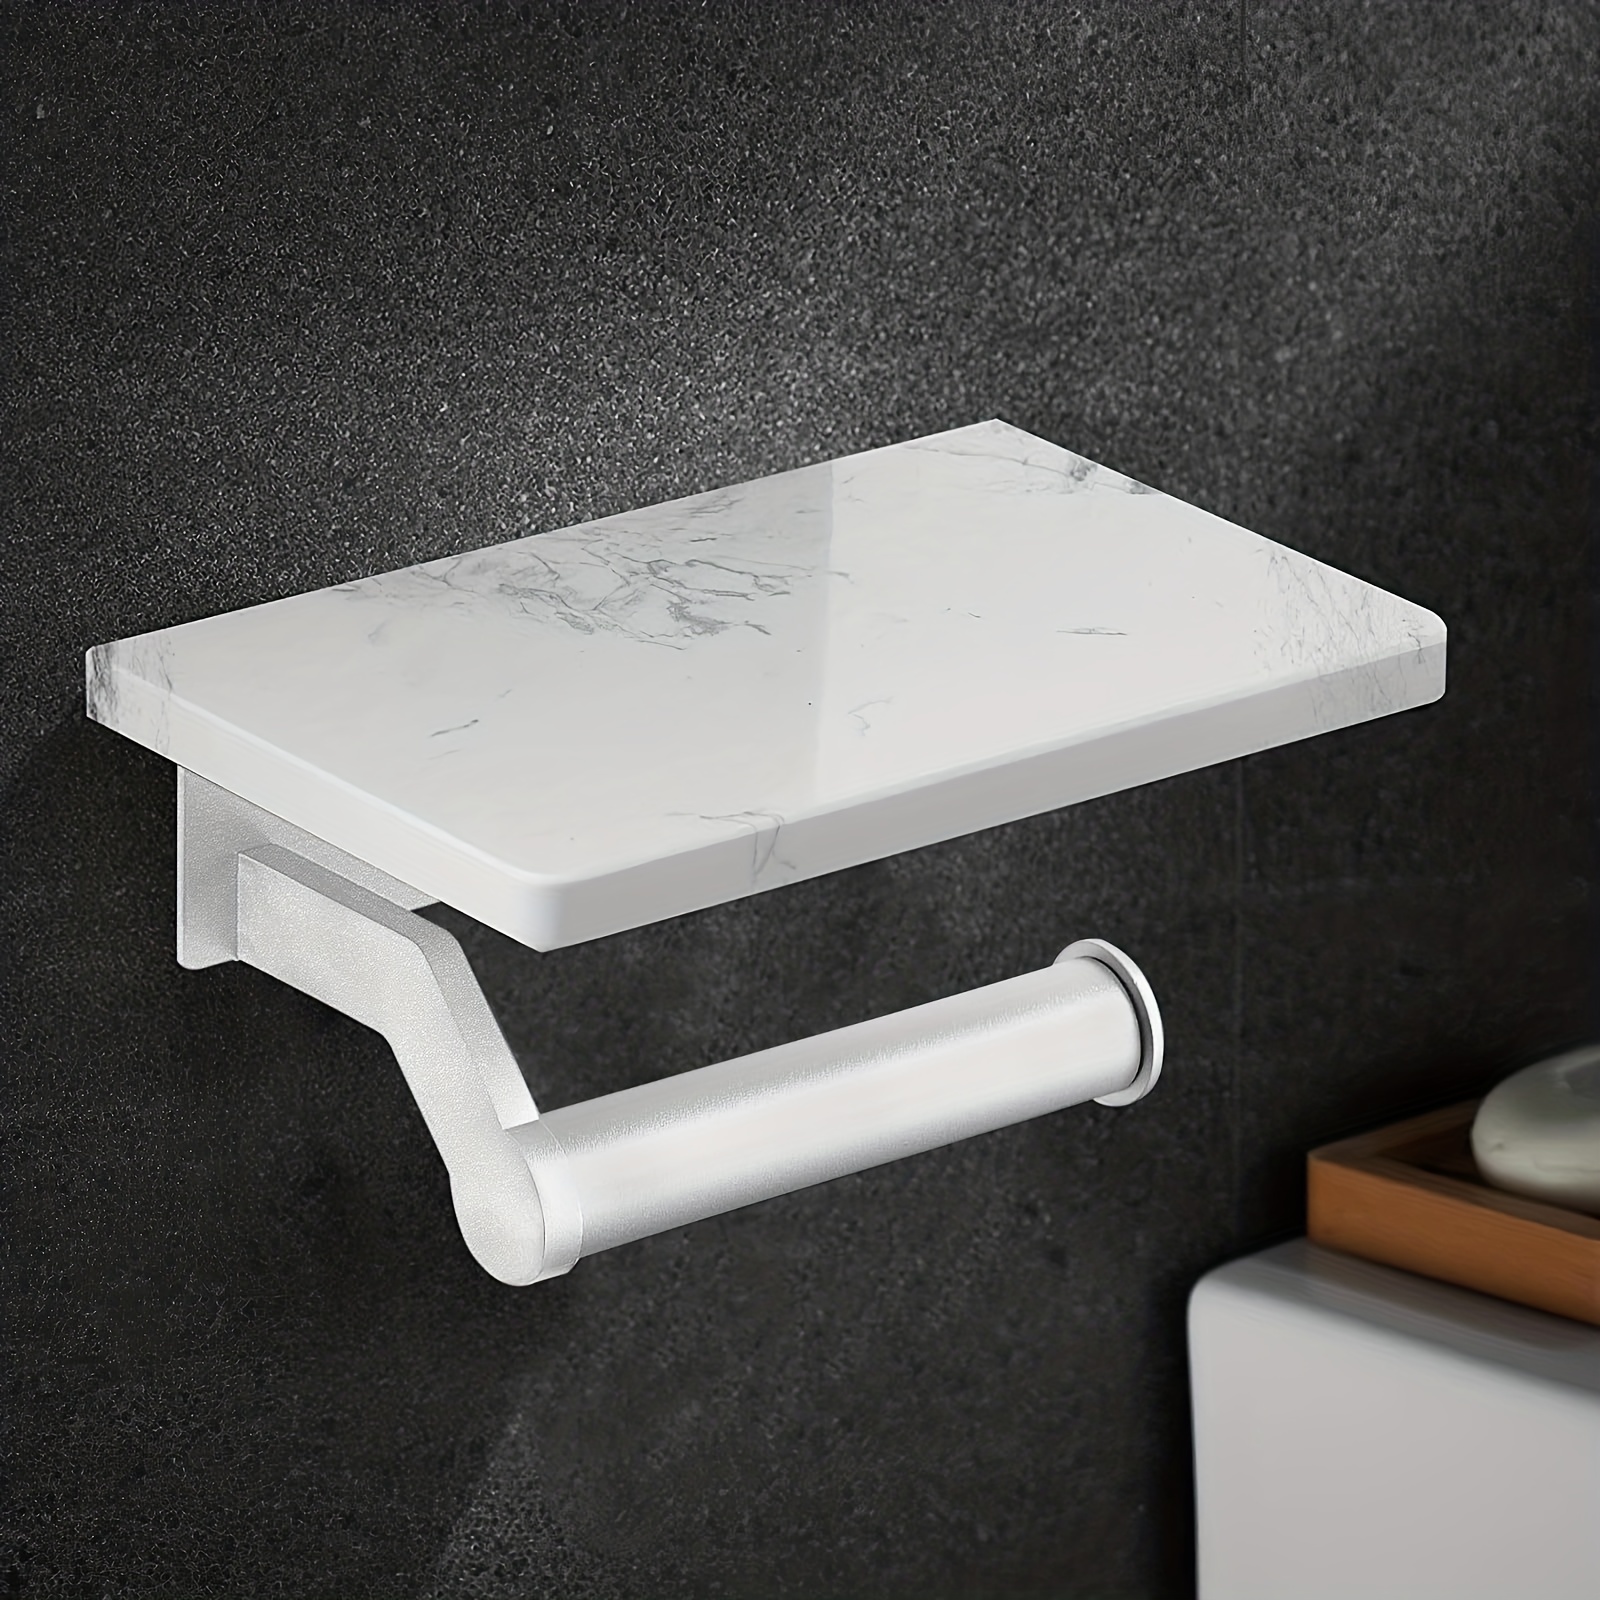 White Chrome Stainless Steel Bathroom Toilet Paper Holder With Shelf